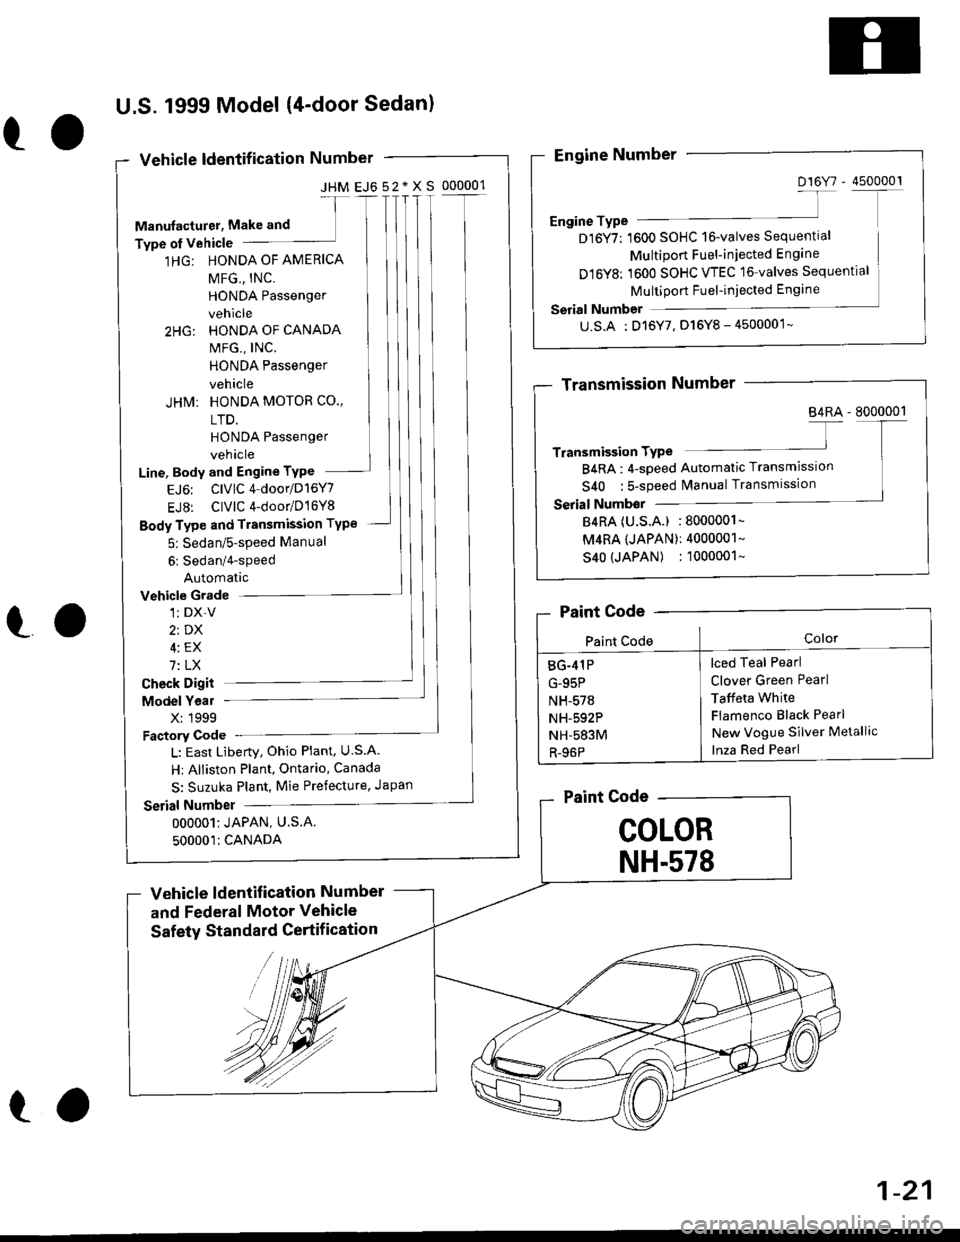 HONDA CIVIC 1996 6.G User Guide ro
U.S. 1999 Model (4door Sedan)
Vehicle ldentif ication Number
JHM EJ652*XS 000001-f
Manufacturel, Make and
Type ol vehicle
1HG: HONDA OF AMERICA
Vehicle Gradel: DX-V
2t DX
4: EX
7: LX
HONDA Passen